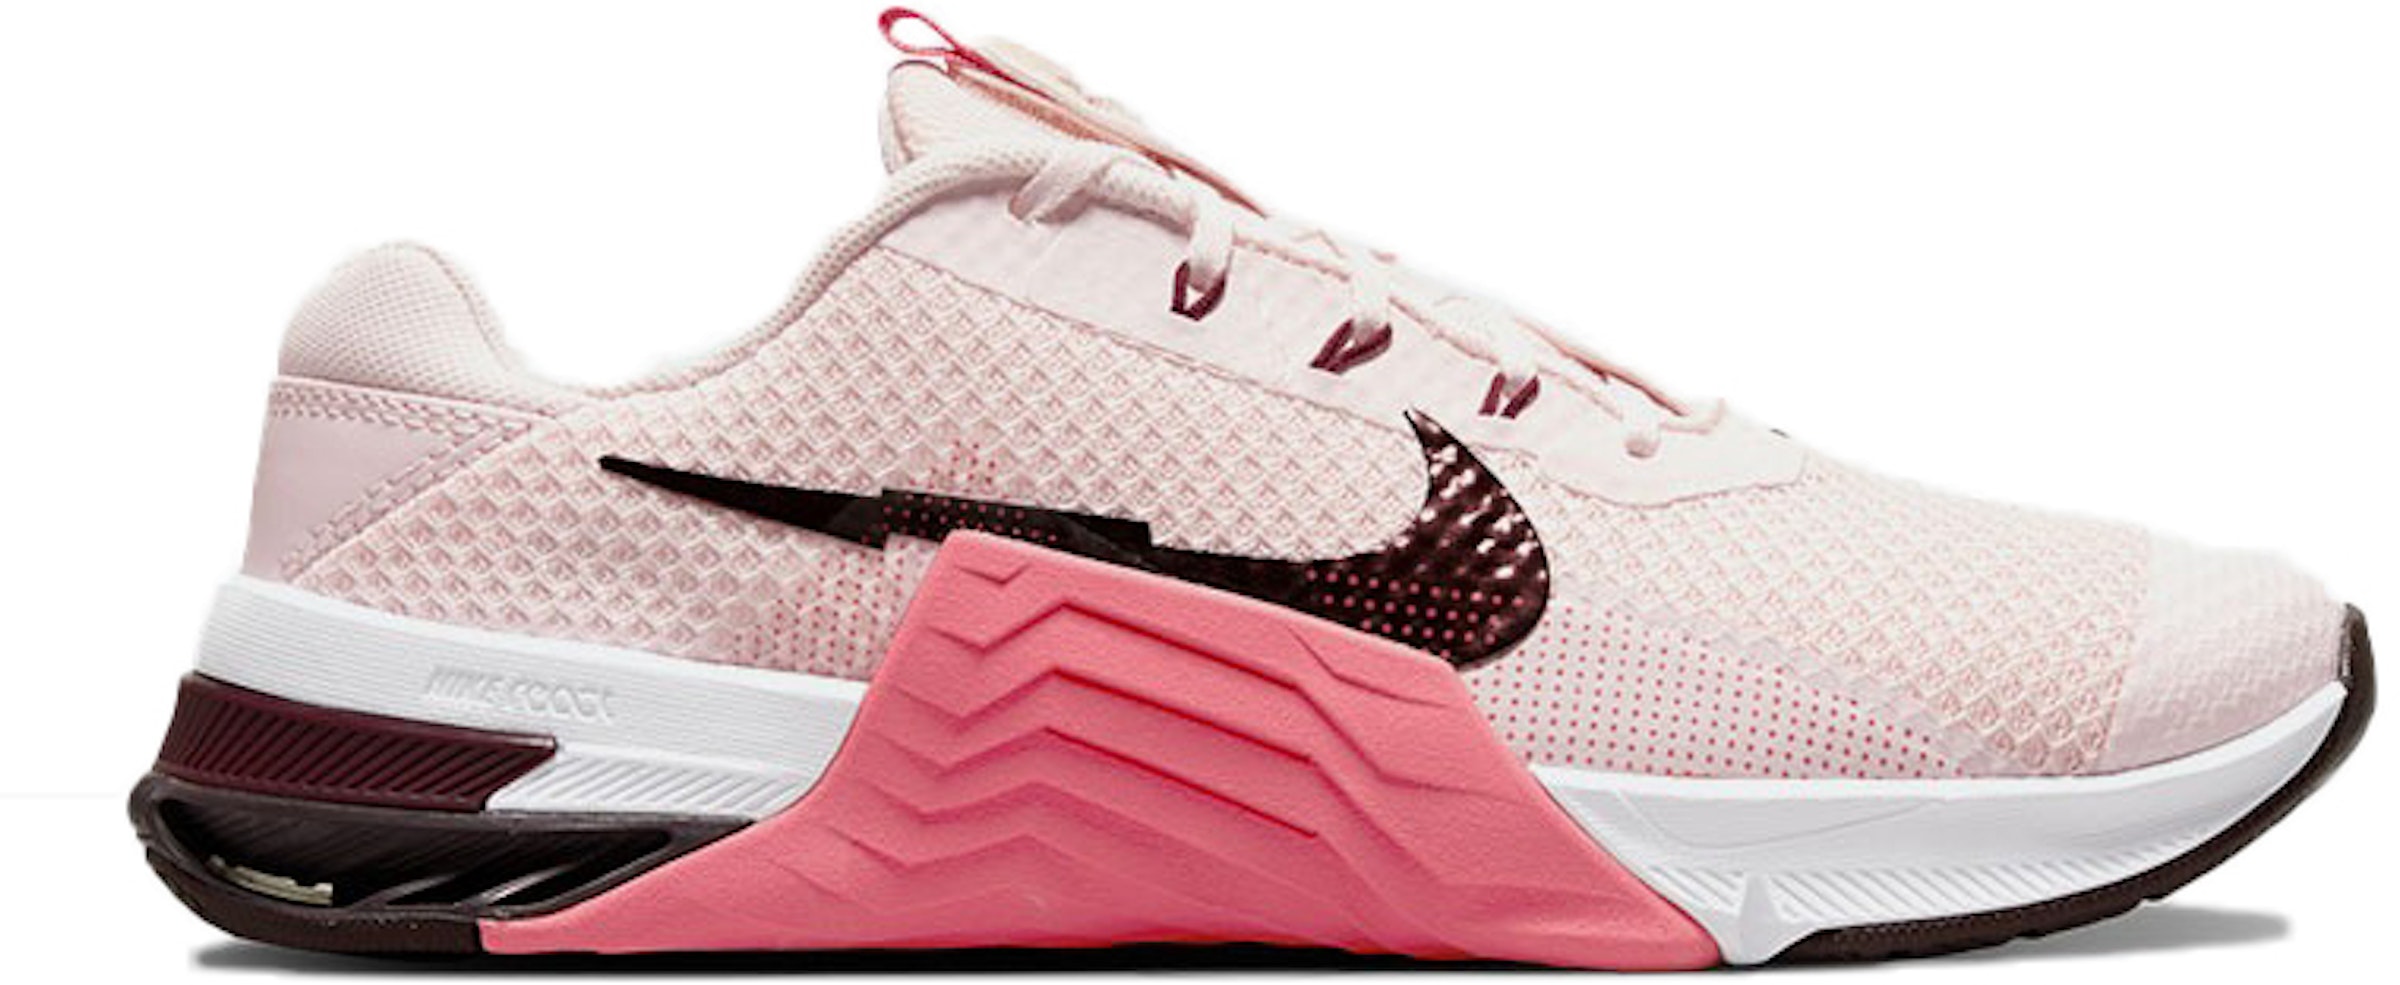 Radioactivo Resplandor observación Nike Metcon 7 Light Soft Pink (Women's) - CZ8280-669 - US